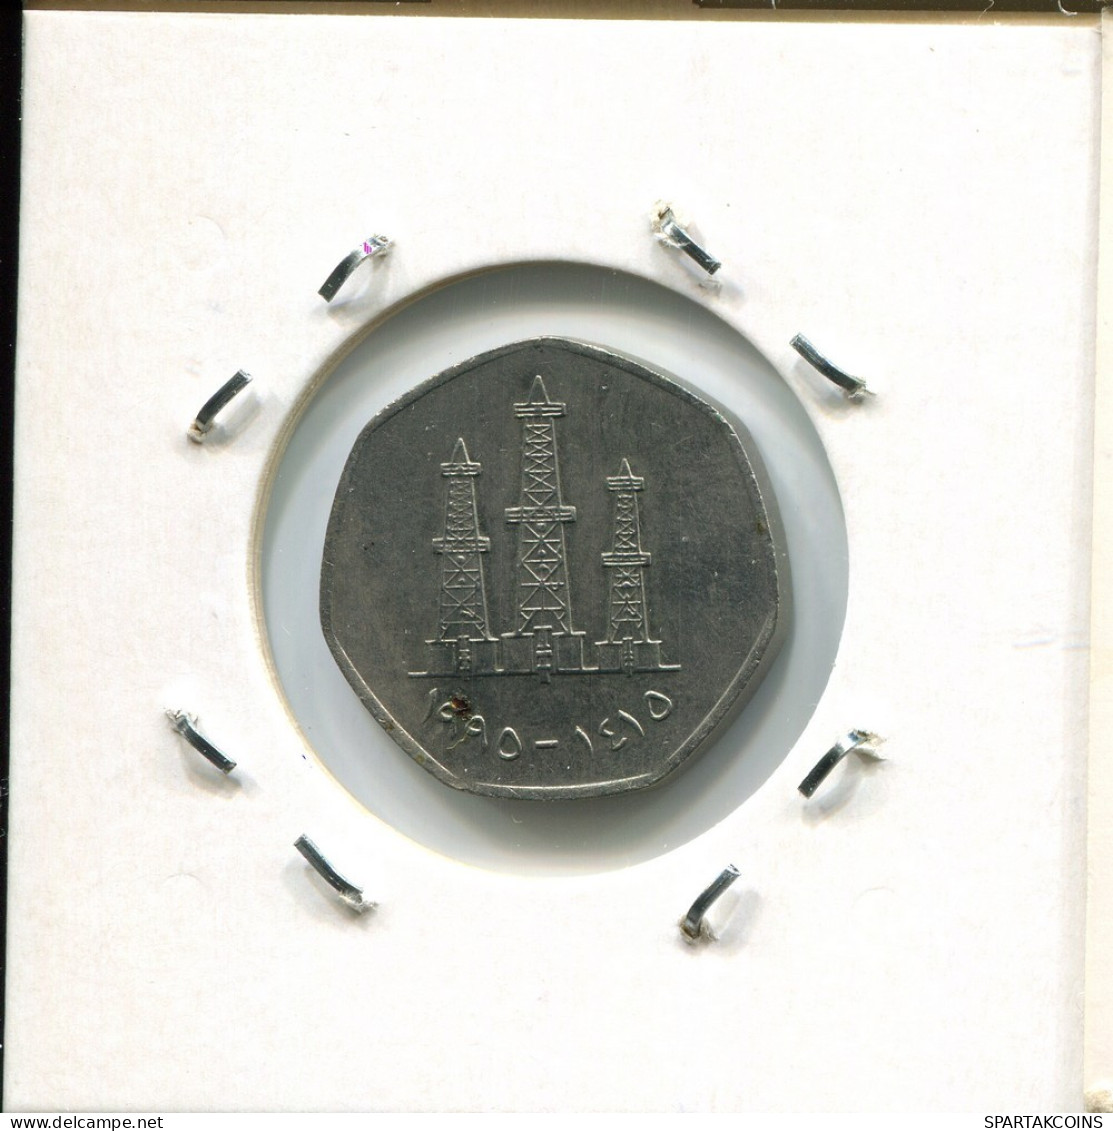 50 FILS 1995 UAE UNITED ARAB EMIRATES Islámico Moneda #AR494.E.A - Emiratos Arabes